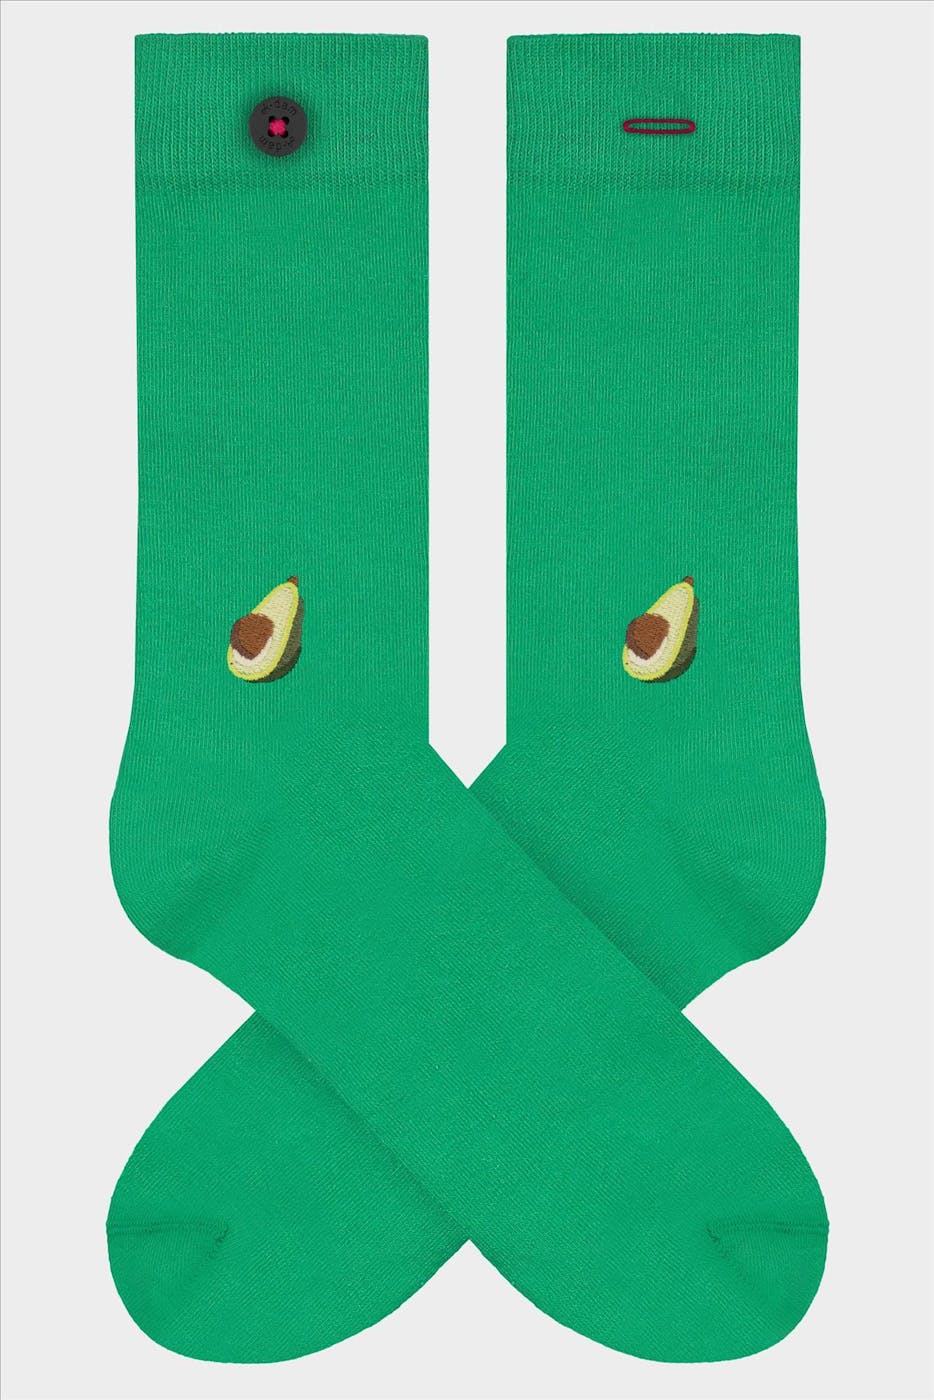 A'dam - Grasgroene 'Dick' sokken, maat: 41-46